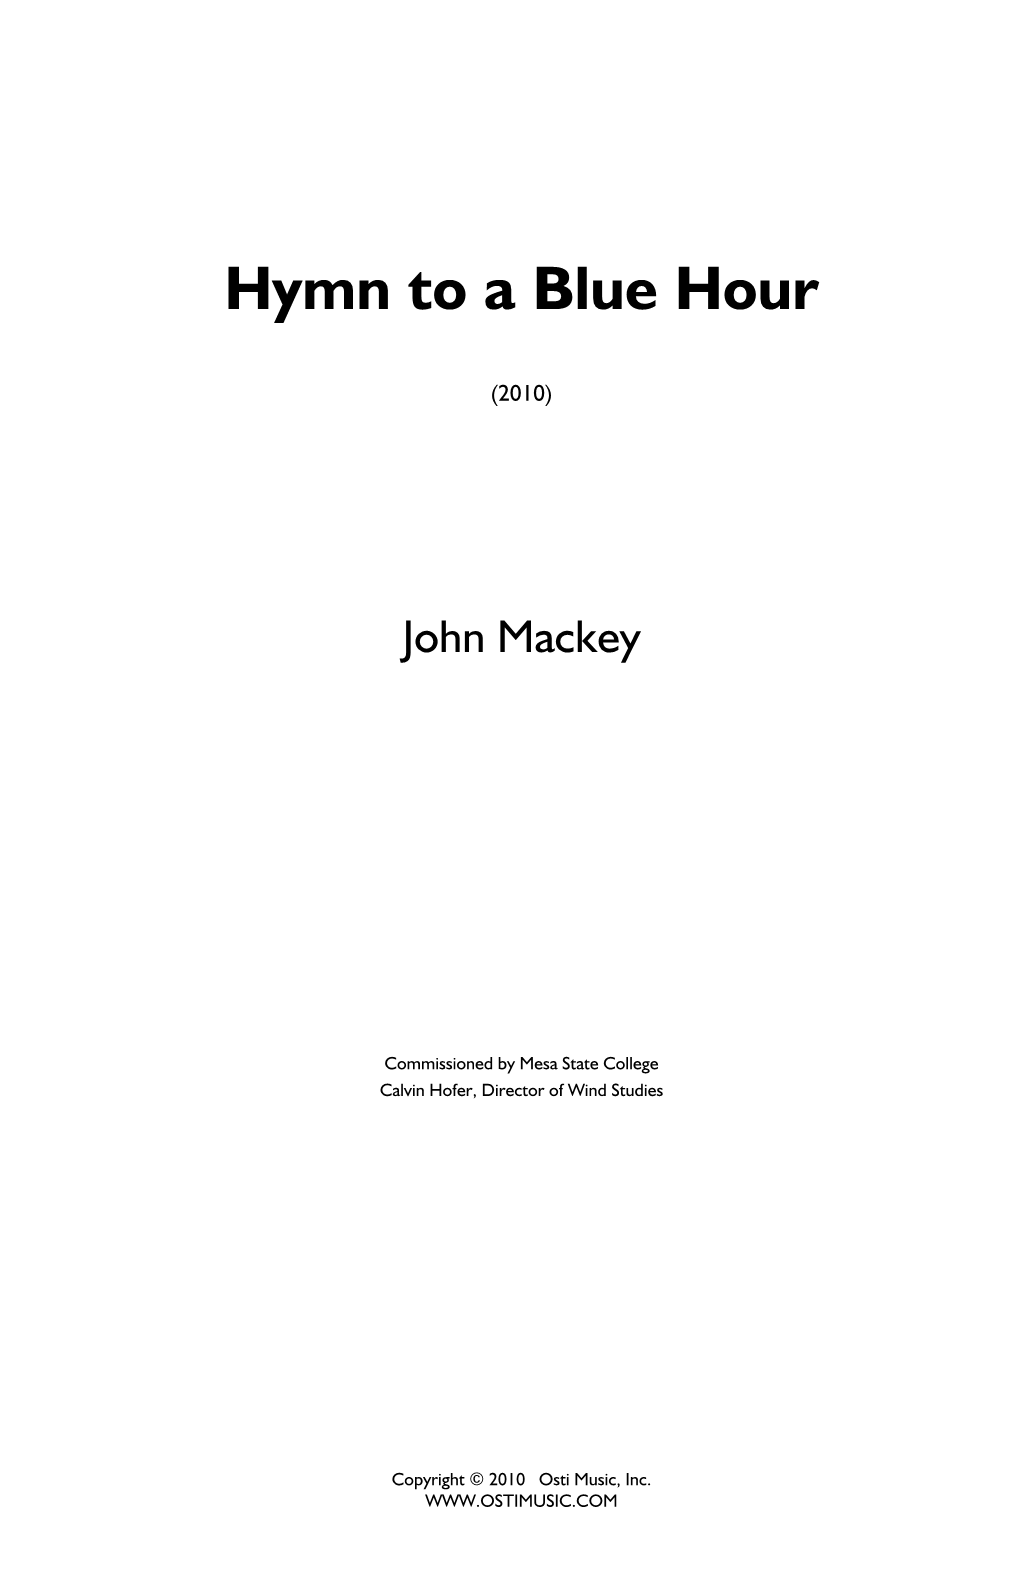 Hymn to a Blue Hour